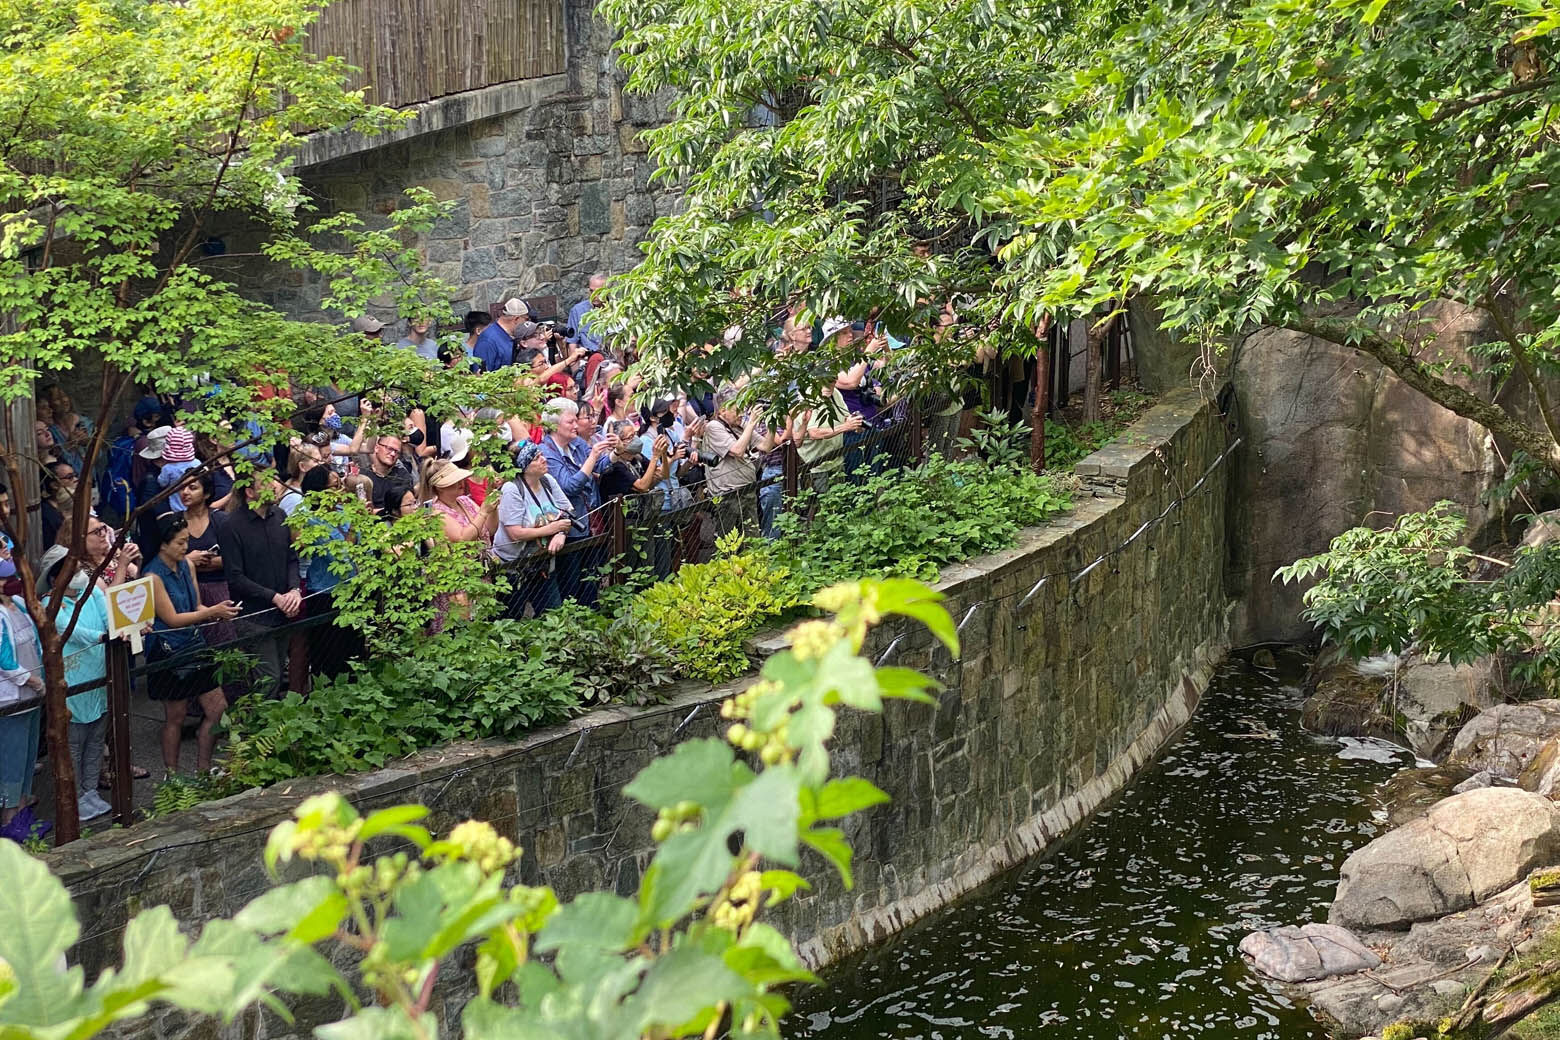 Hundreds of panda fans gathered around Mei’s habitat to celebrate. (WTOP/Luke Lukert)